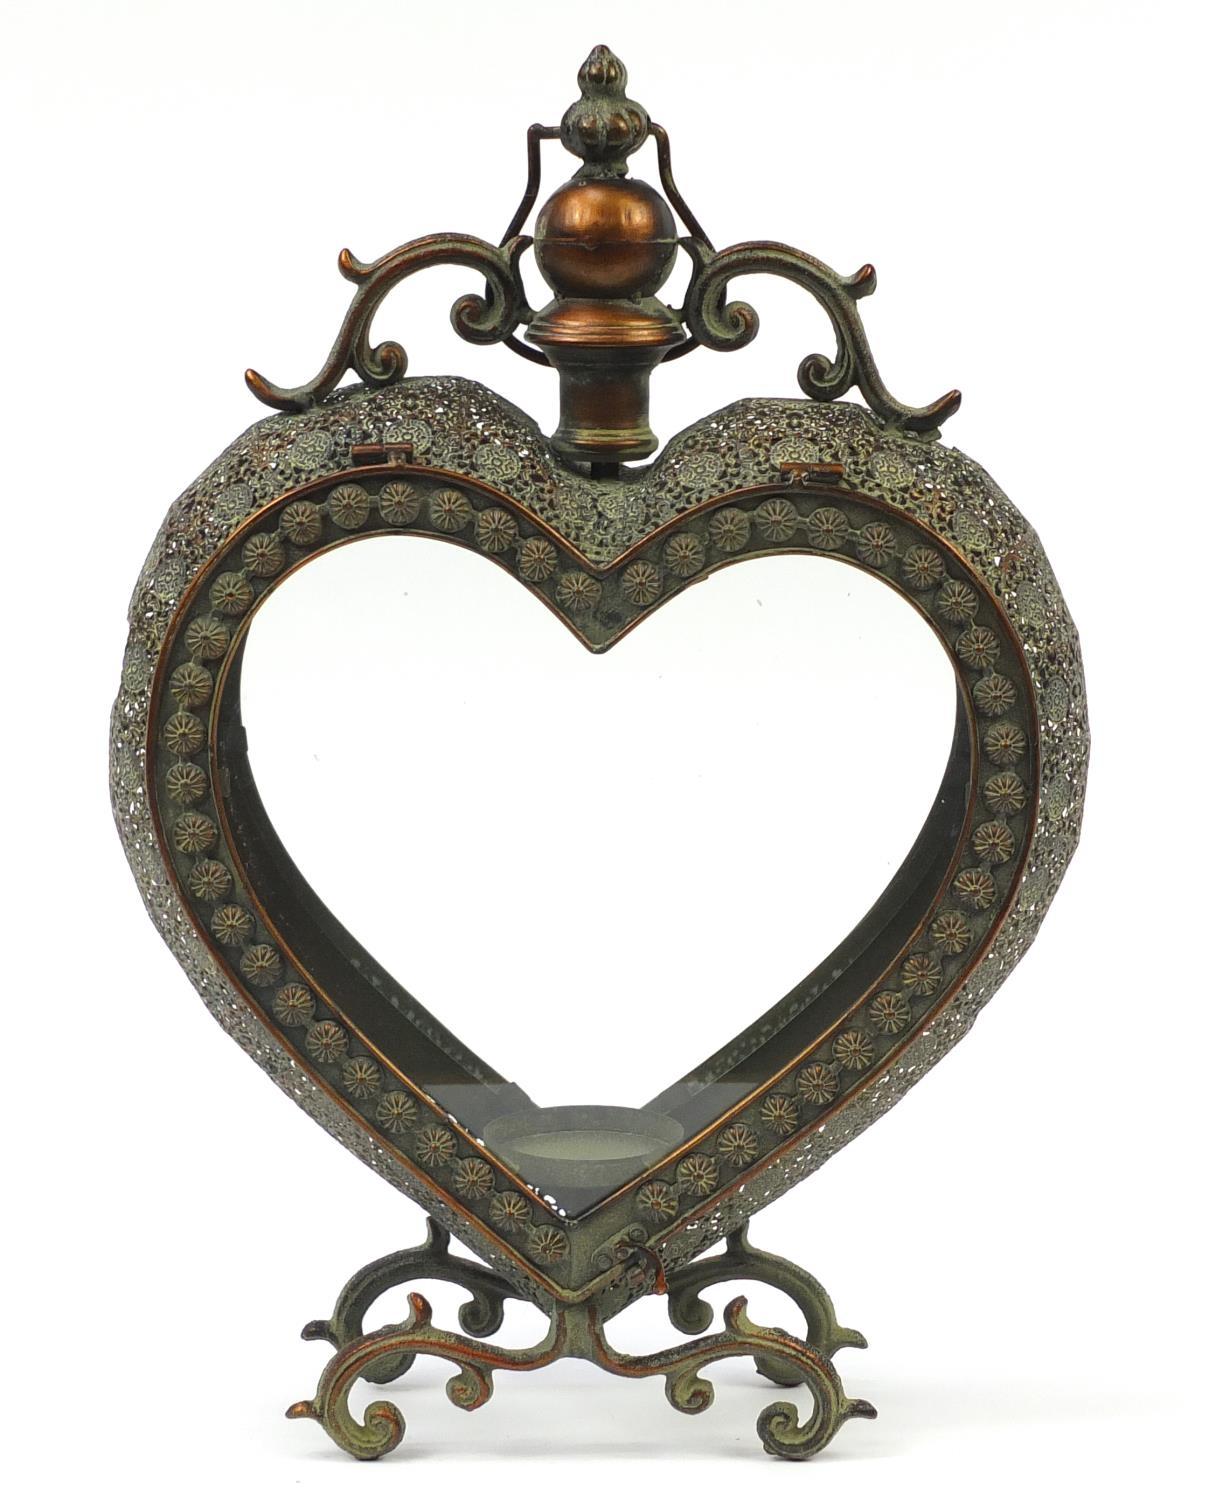 Pierced bronzed love heart design candle holder, 53cm high - Image 2 of 7